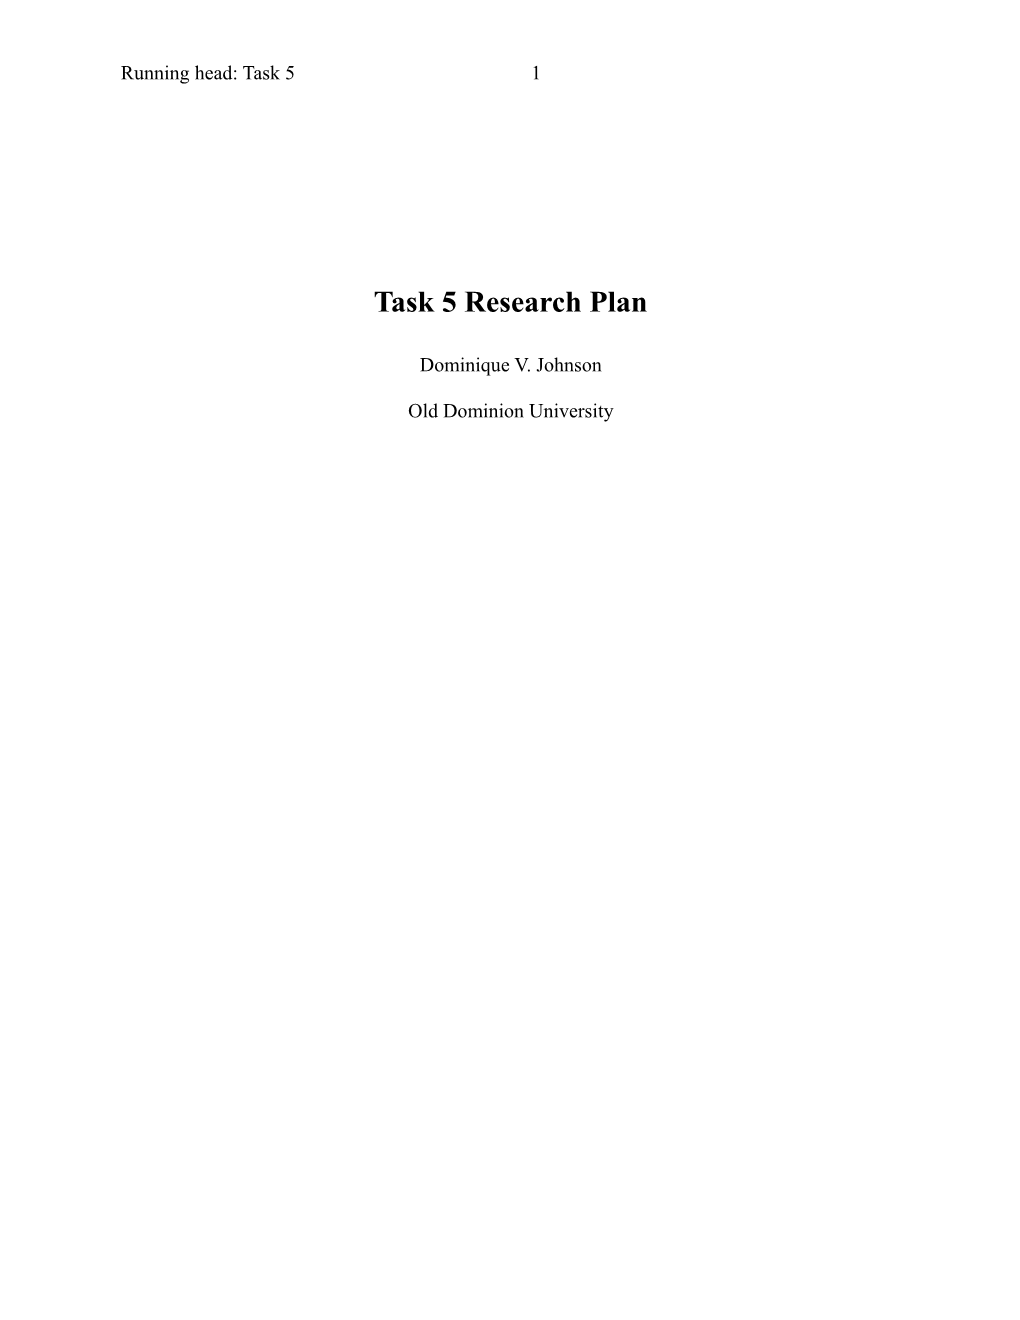 Task 5 Research Plan